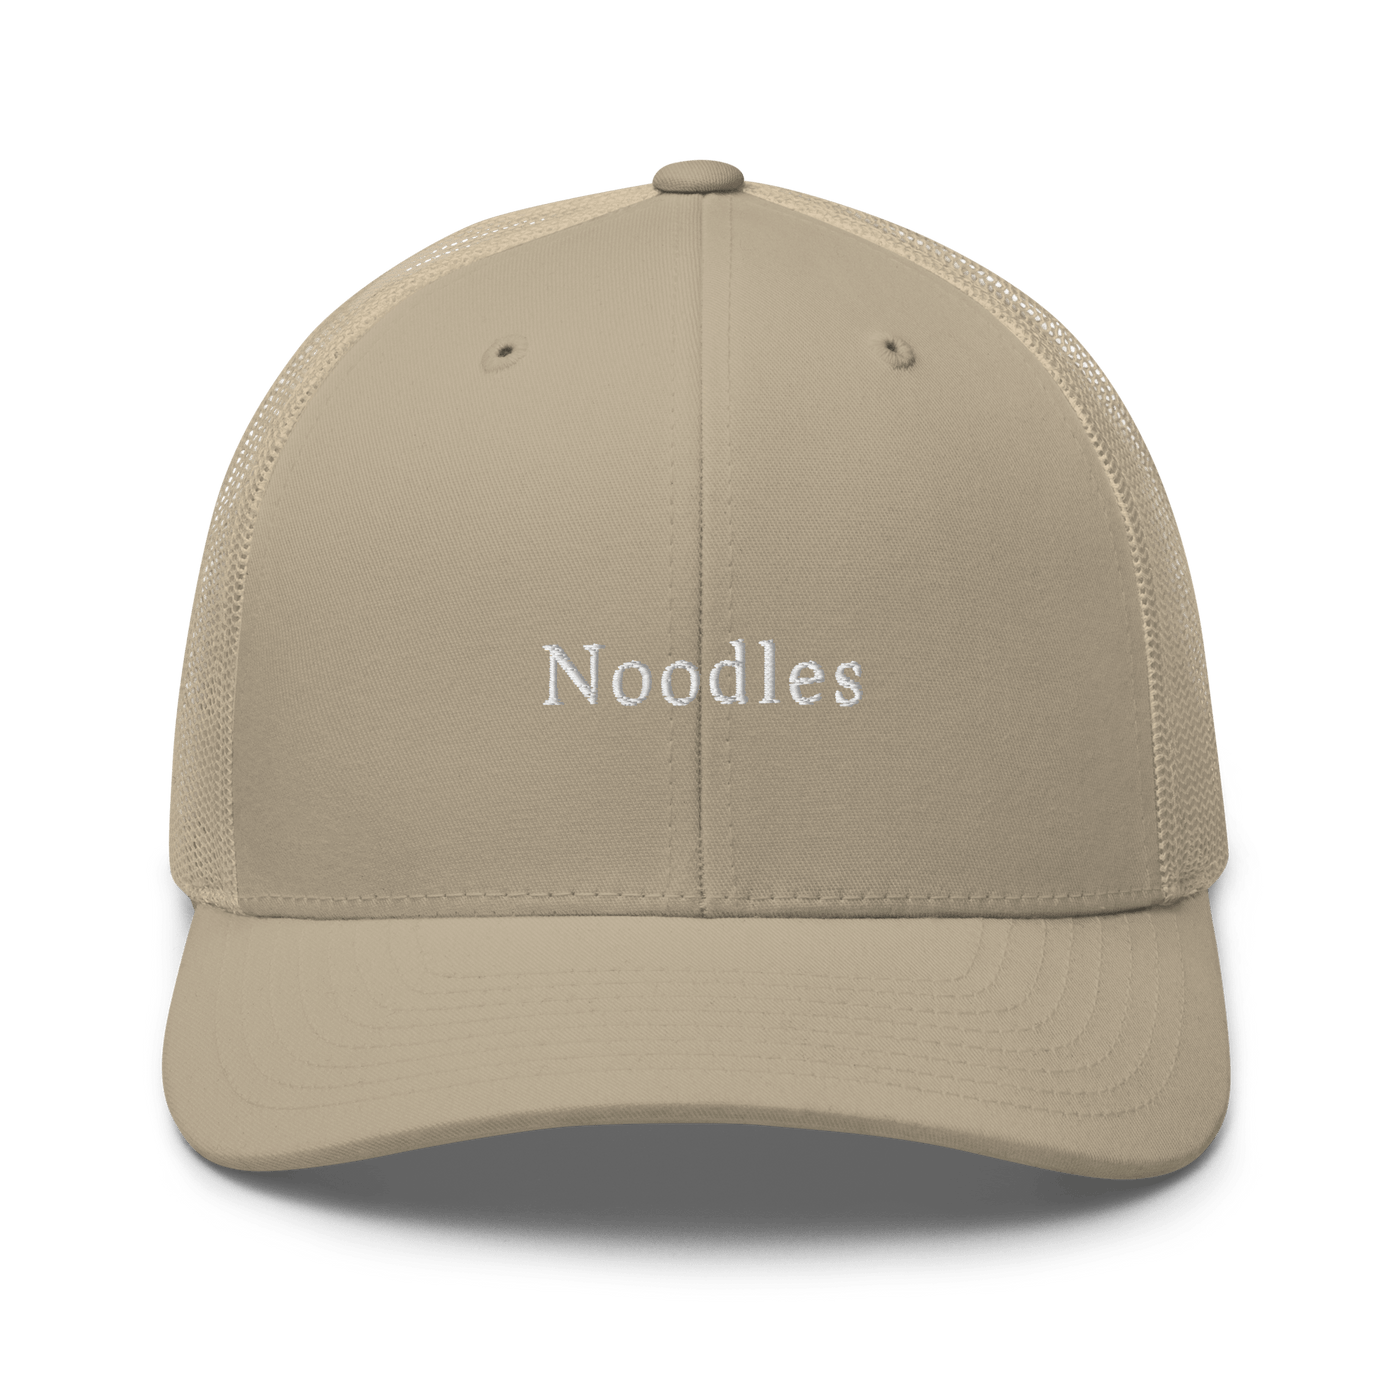 Noodles Trucker Cap - Khaki - - Just Another Cap Store